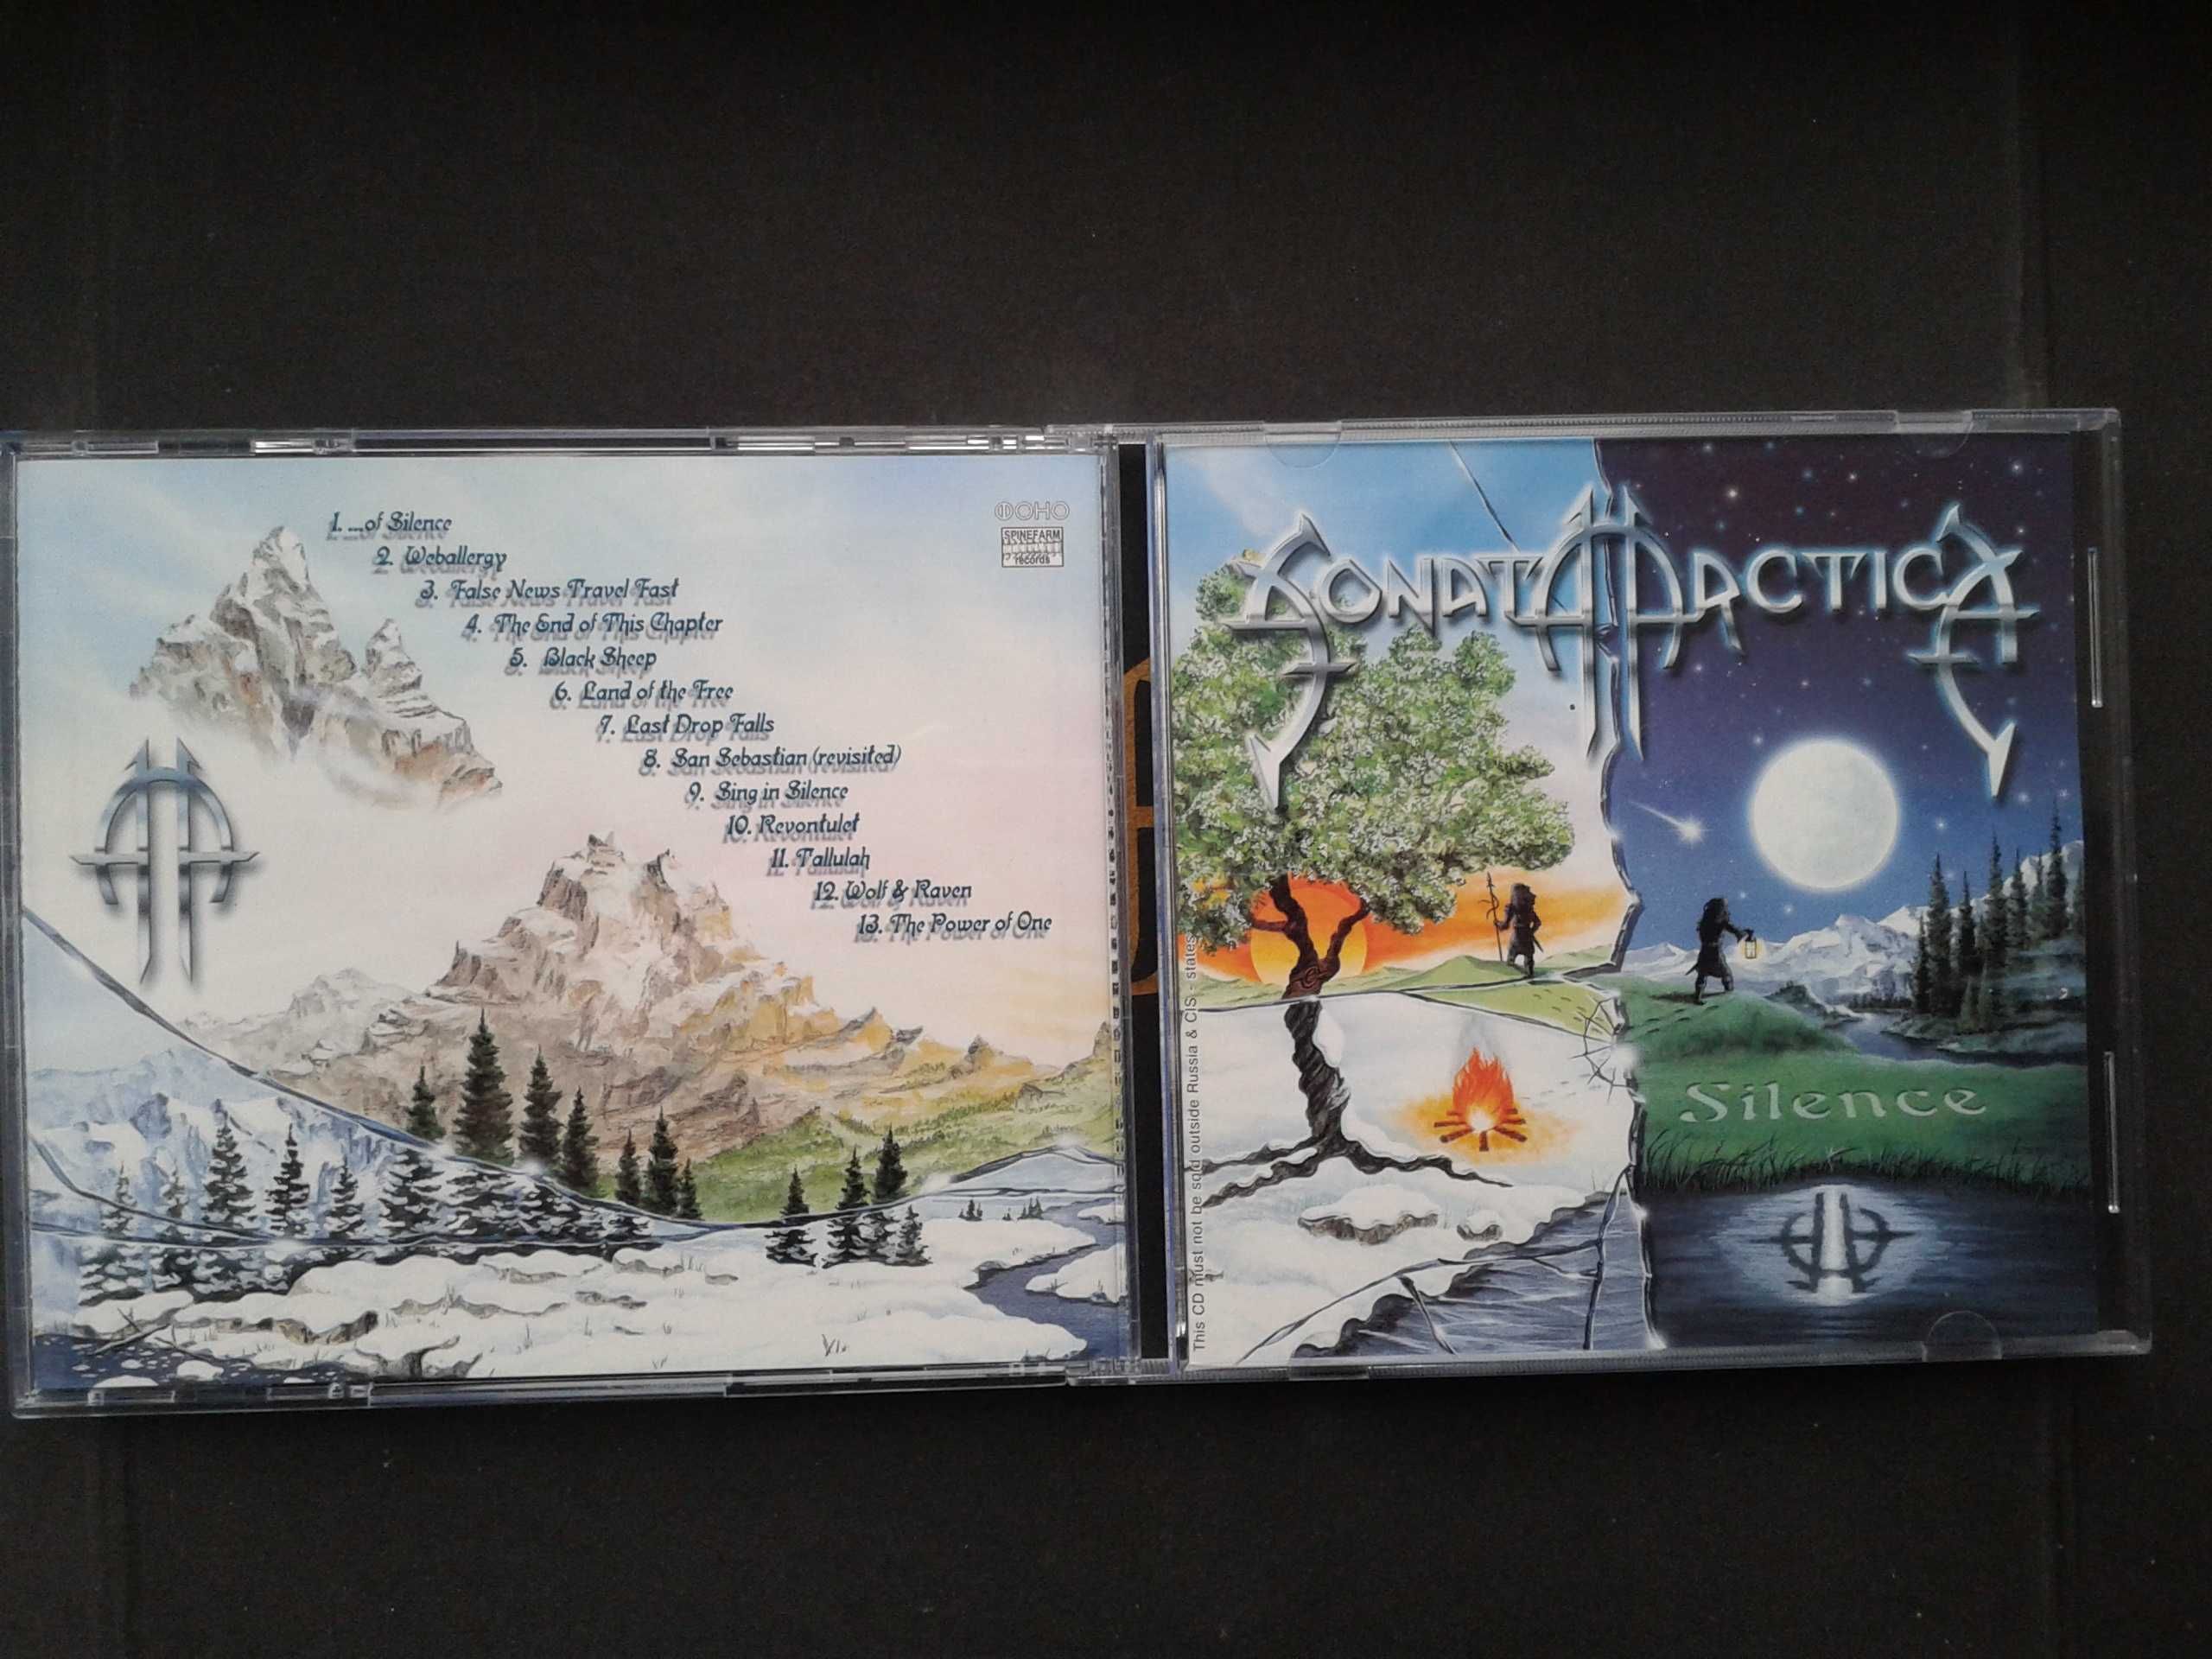 Sonata Arctica (7CD)